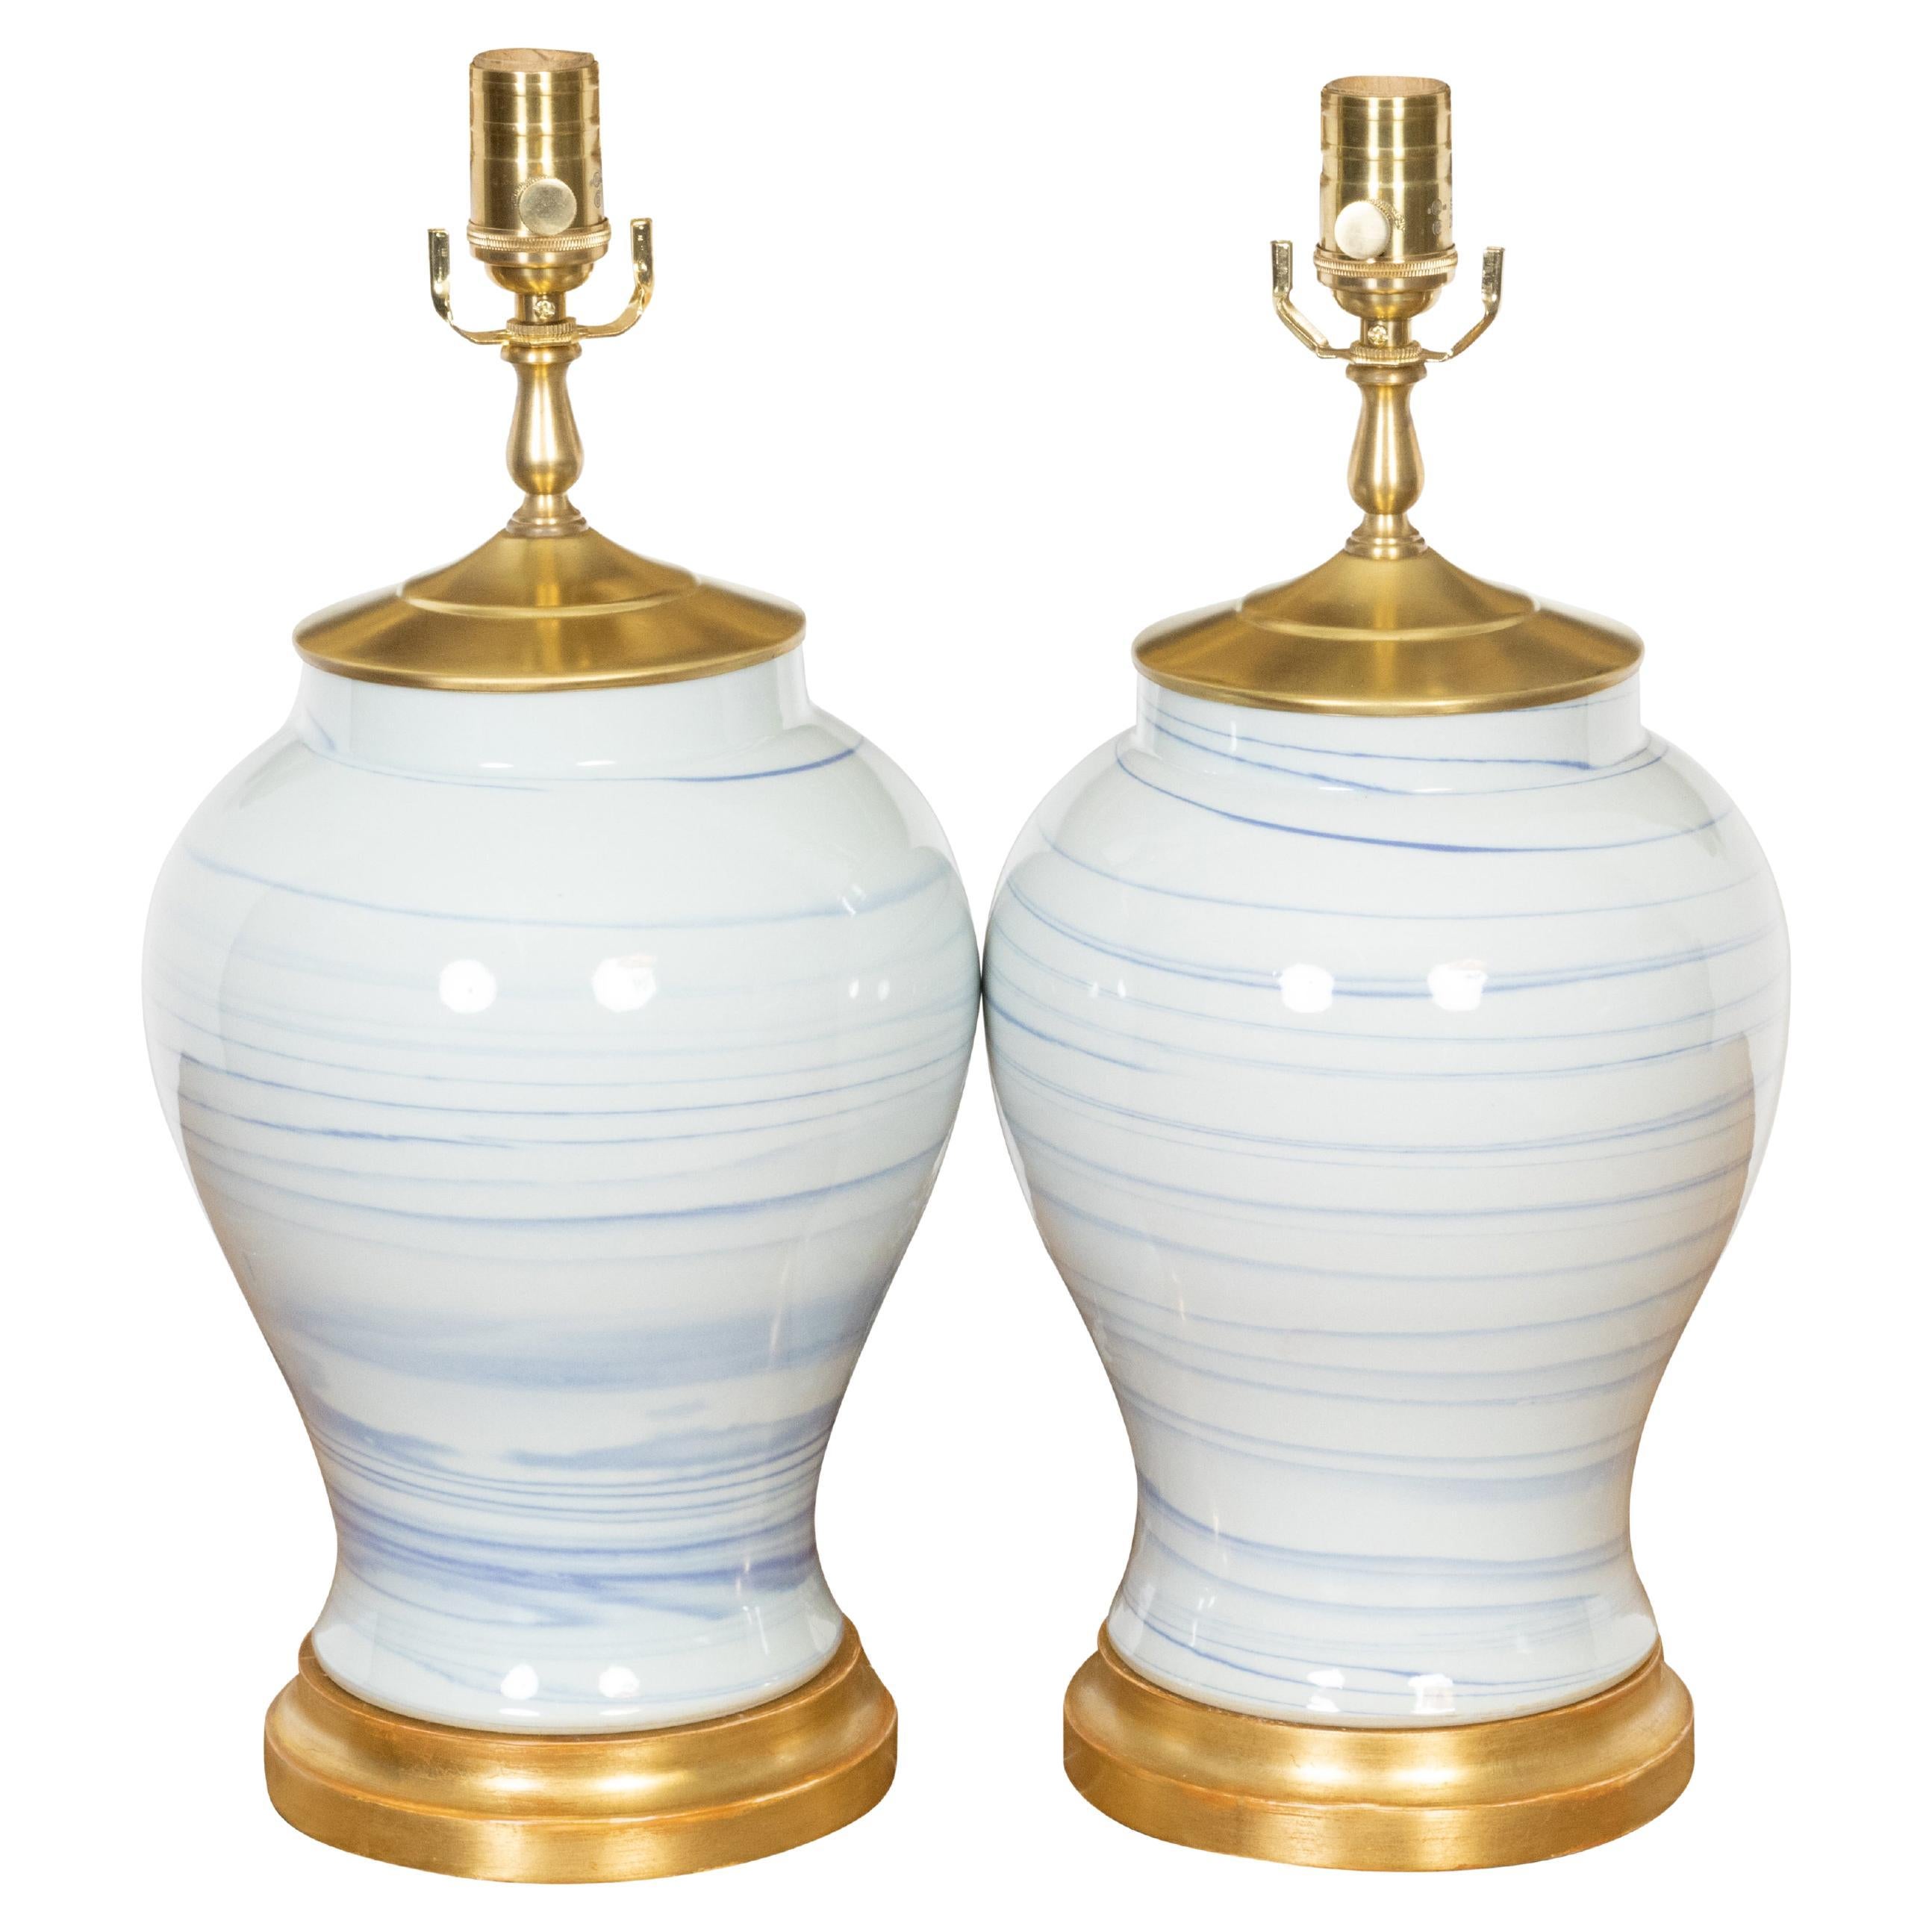 Paar asiatische Porzellanvasen in moderne Tischlampen umgewandelt, US-Draht